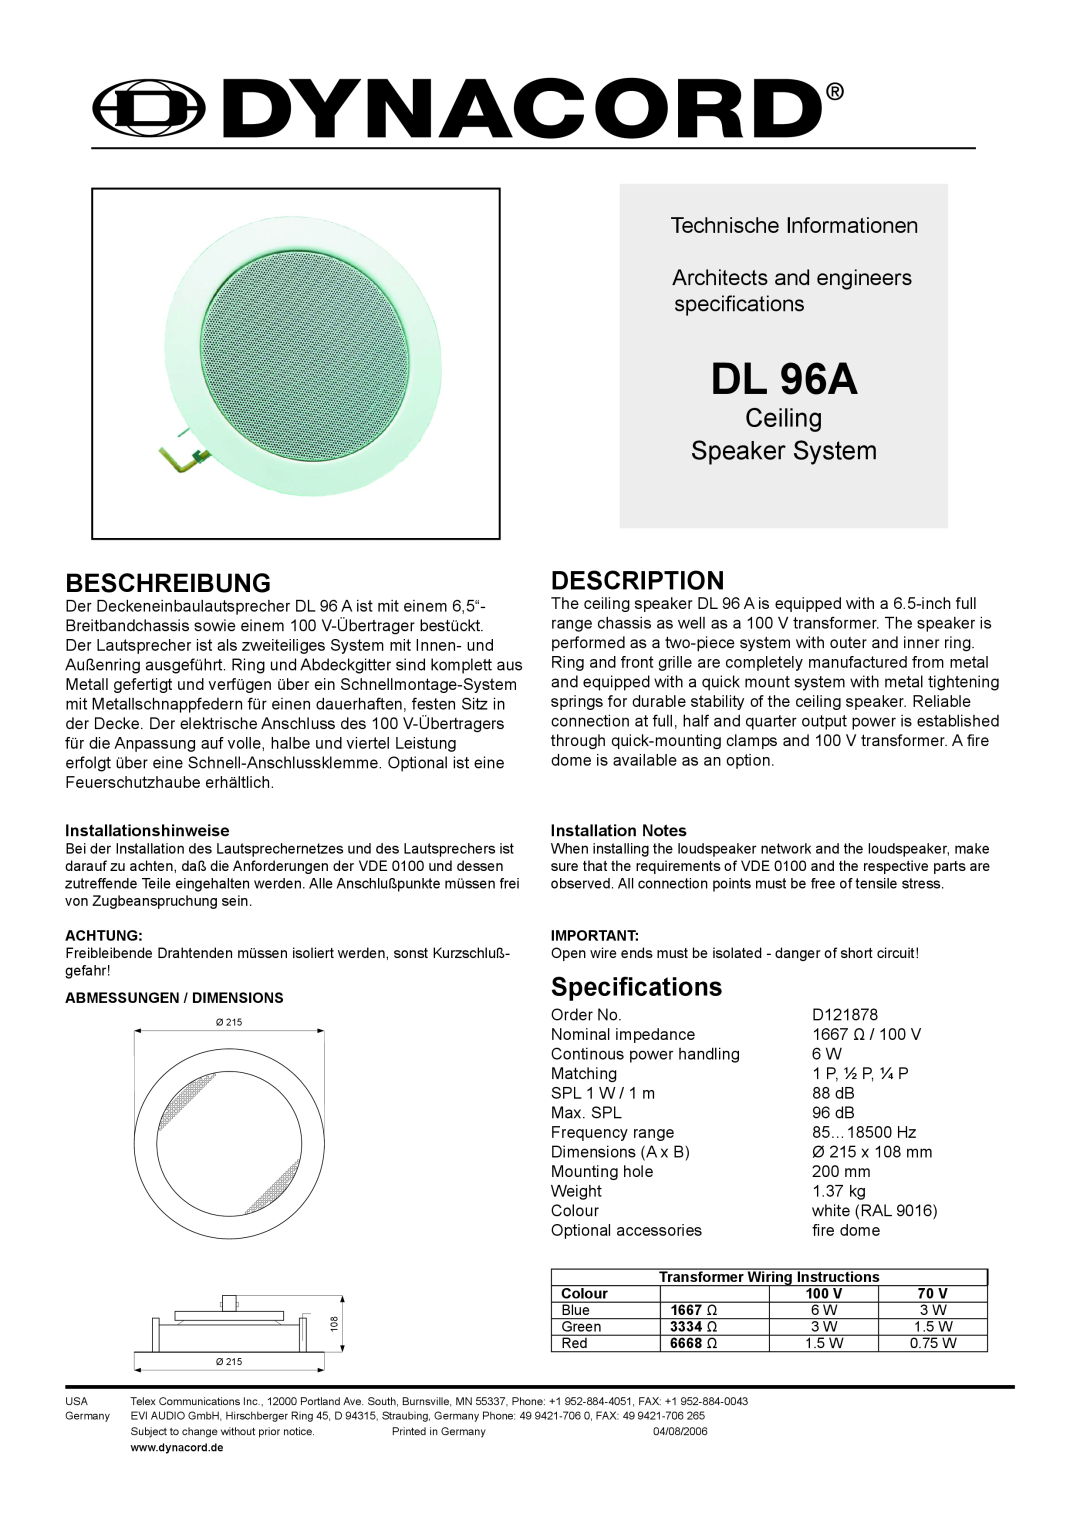 Dynacord DL 96A dimensions Beschreibung, Ceiling Speaker System, Description, Specifications, Technische Informationen 